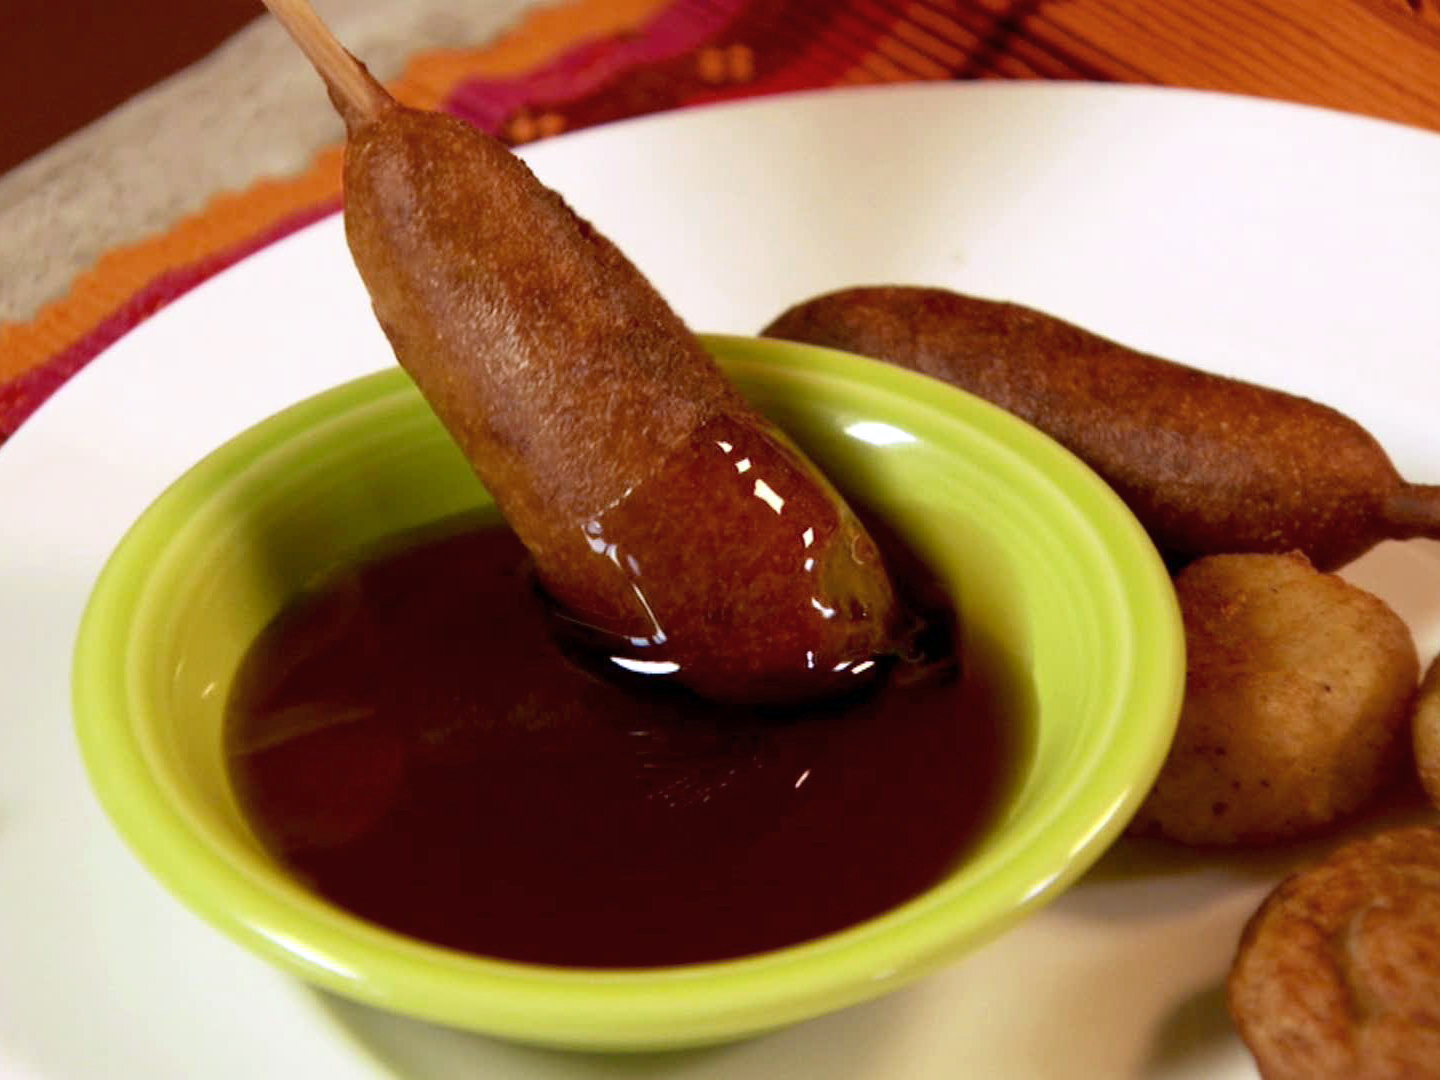 https://www.foodnetwork.com/content/dam/images/food/fullset/2012/4/27/0/WU0209H_sausage-pancakes-on-sticks_s4x3.jpg